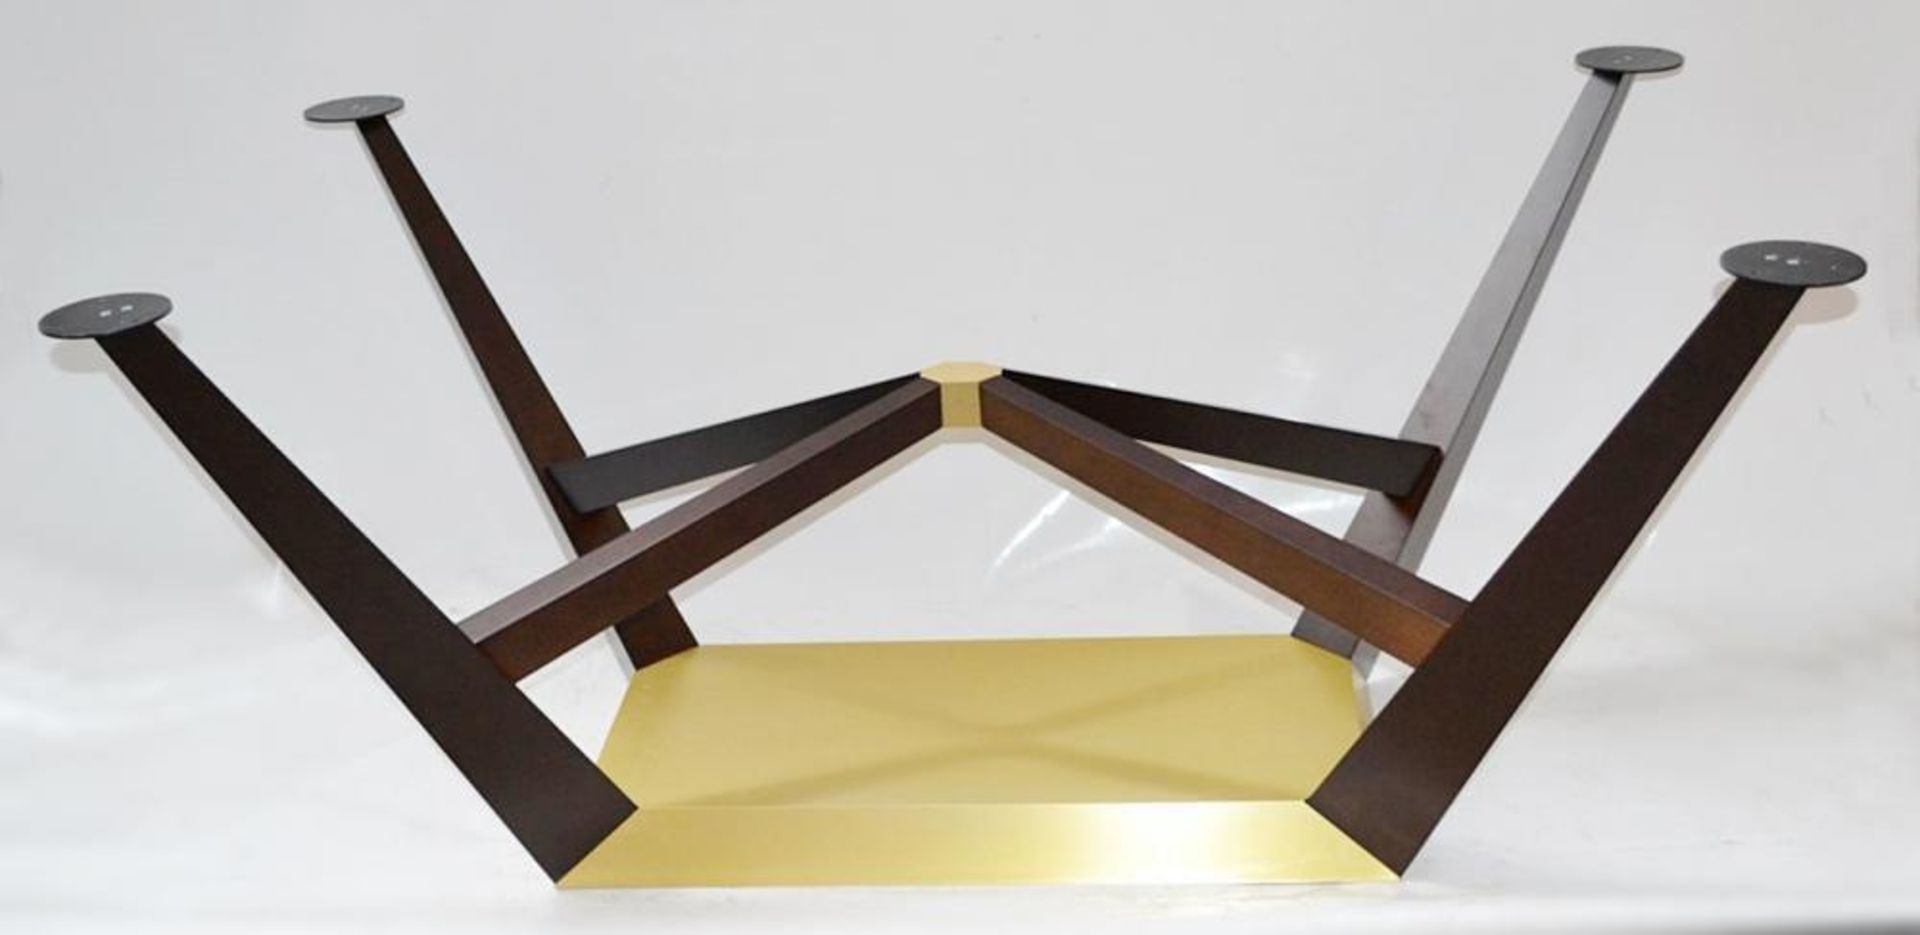 1 x PORADA Ellington Dining Table (Base Only) - Ref: 5568978 - Dimensions: W160 x D88 x H71cm - CL01 - Image 5 of 5